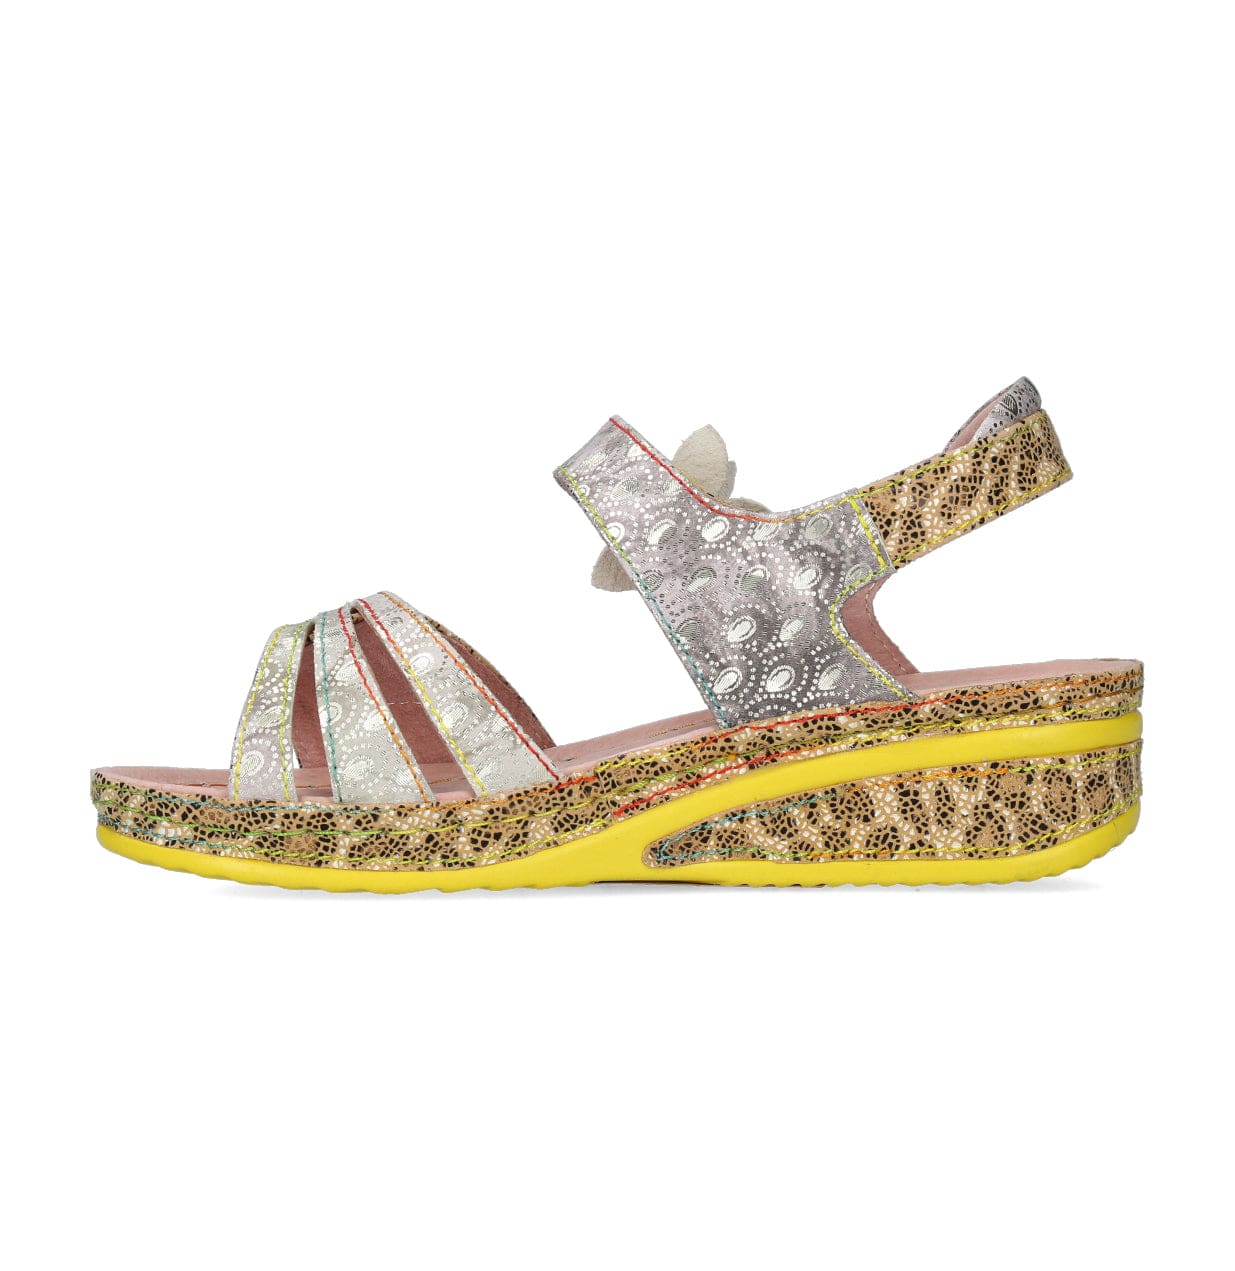 Chaussures JACDISO 03 Fleur - Sandale